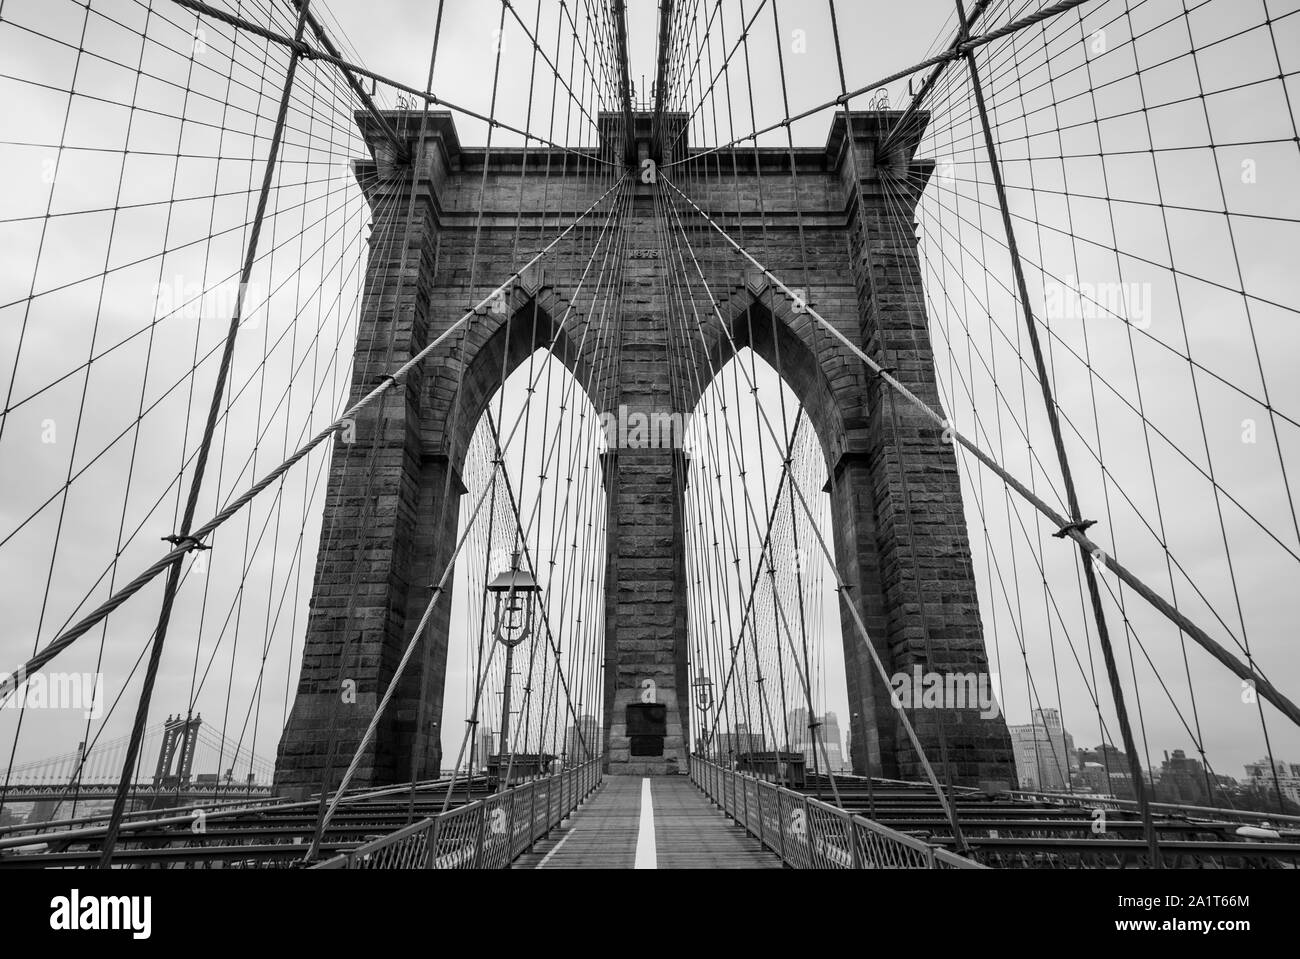 Brooklyn Bridge architecture in black and white tone, New York City Stock Photo